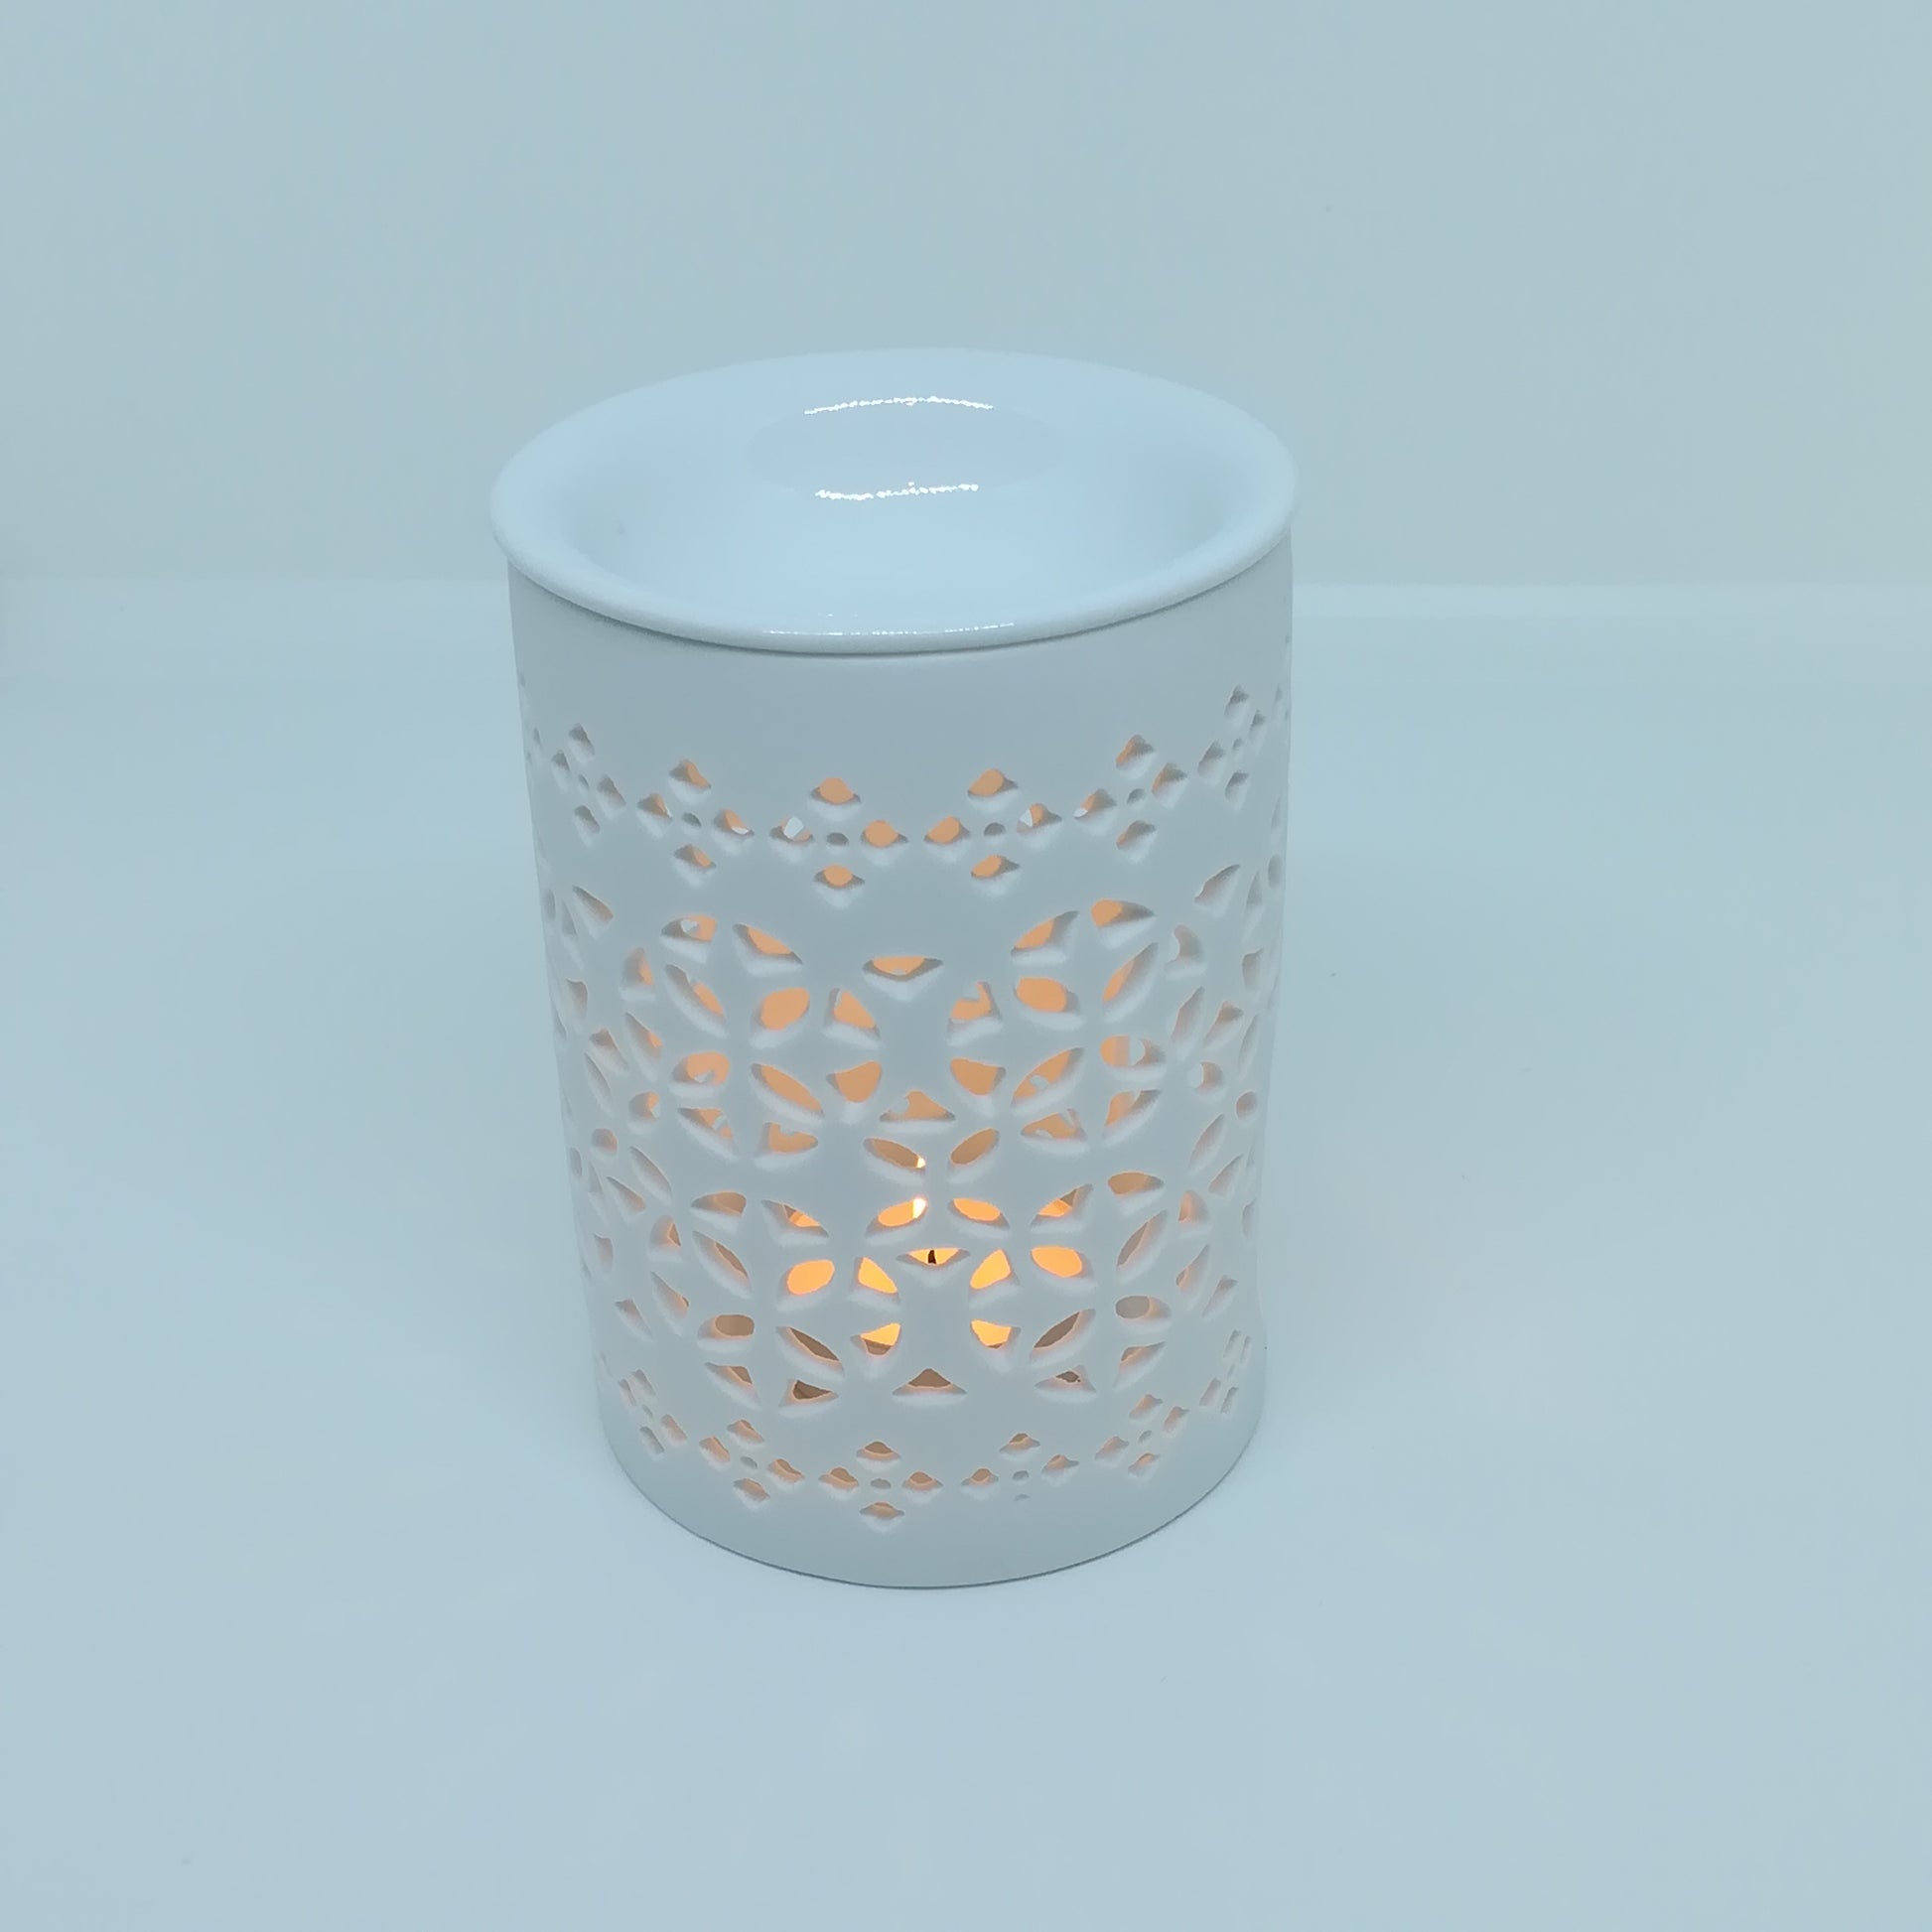 ceramic wax melt burner petal lattice pattern with tealight candle